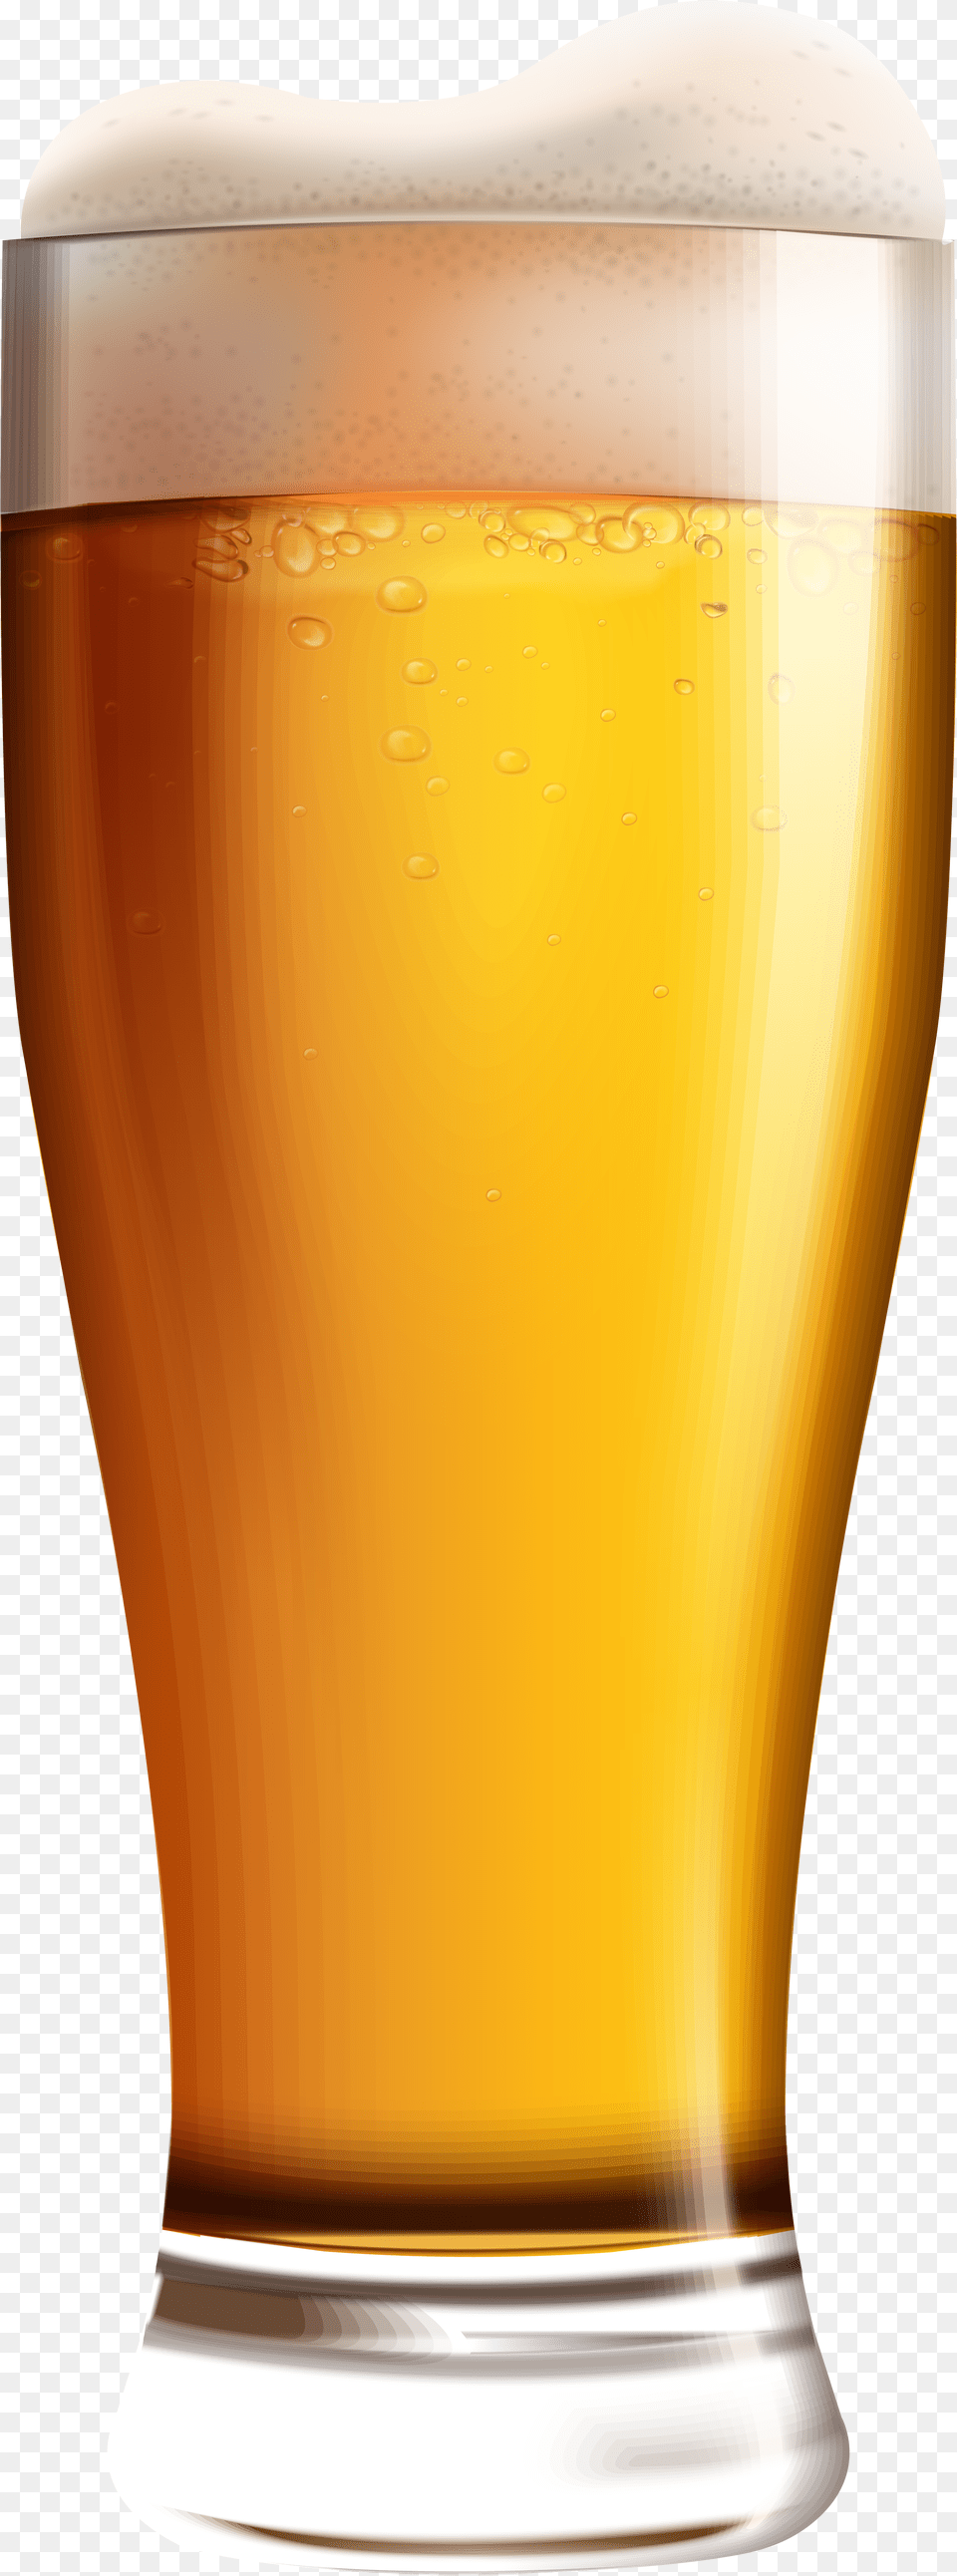 Glass Of Beer, Alcohol, Beer Glass, Beverage, Liquor Free Transparent Png